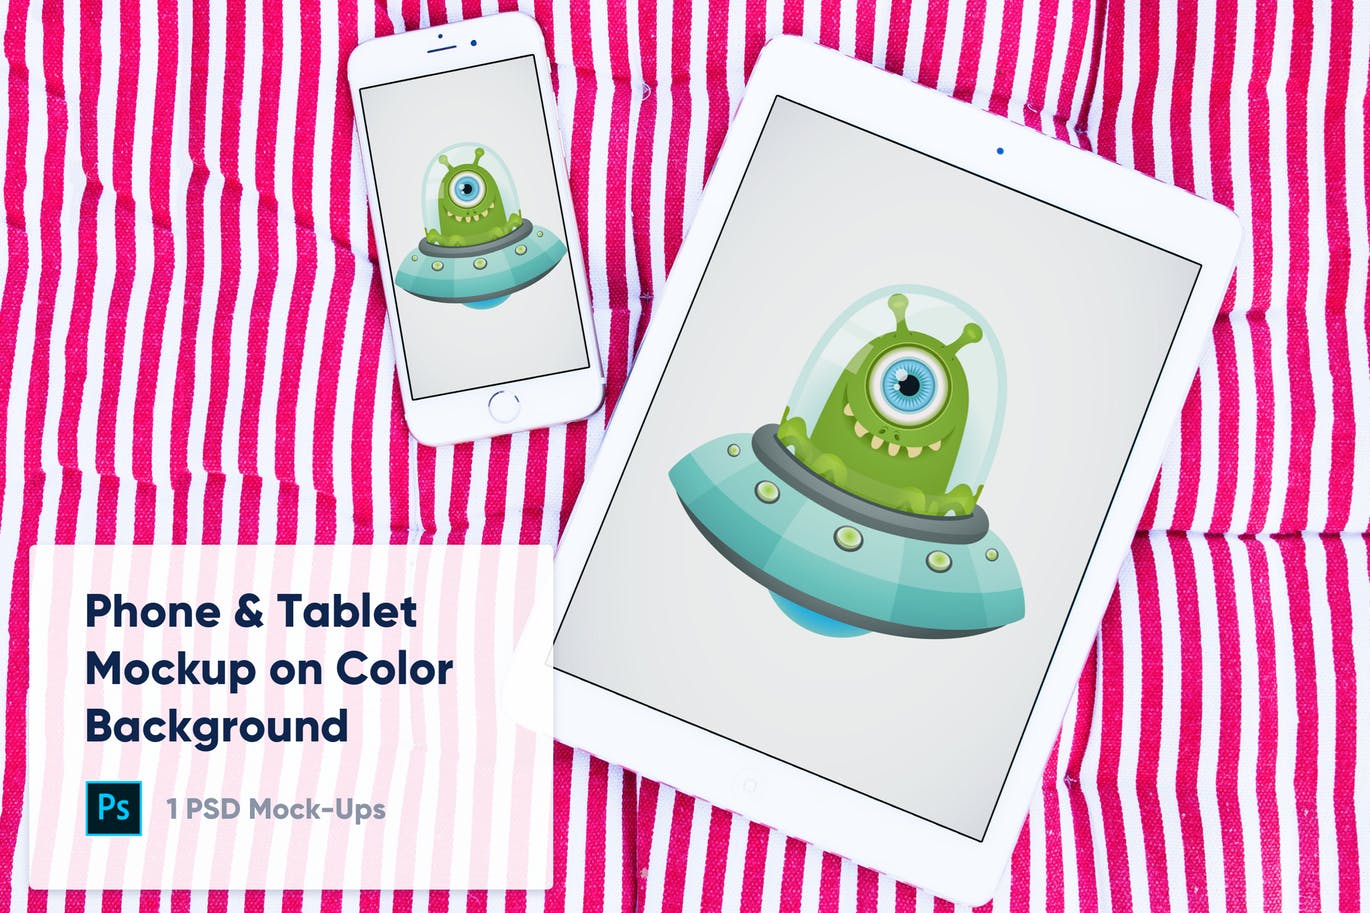 彩色背景平板电脑&手机非凡图库精选样机模板 1 Tablet & Phone Mockup on Color Background插图